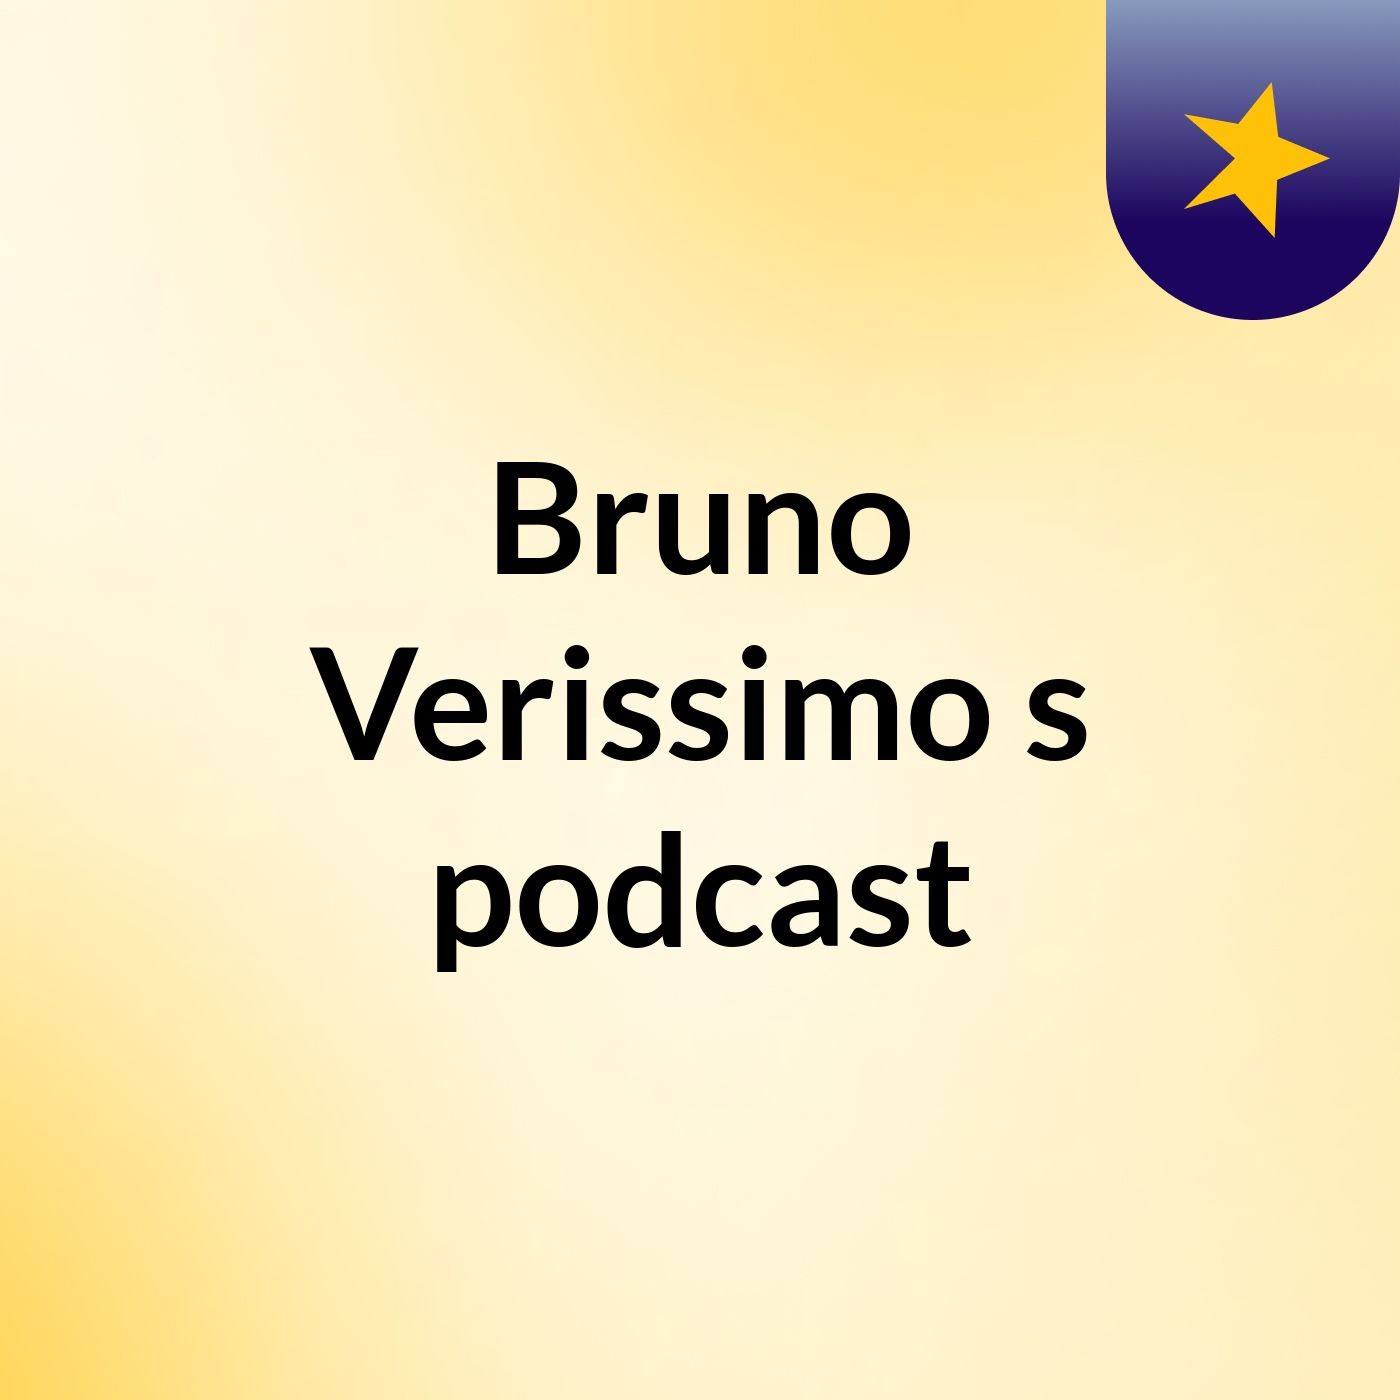 Bruno Verissimo's podcast